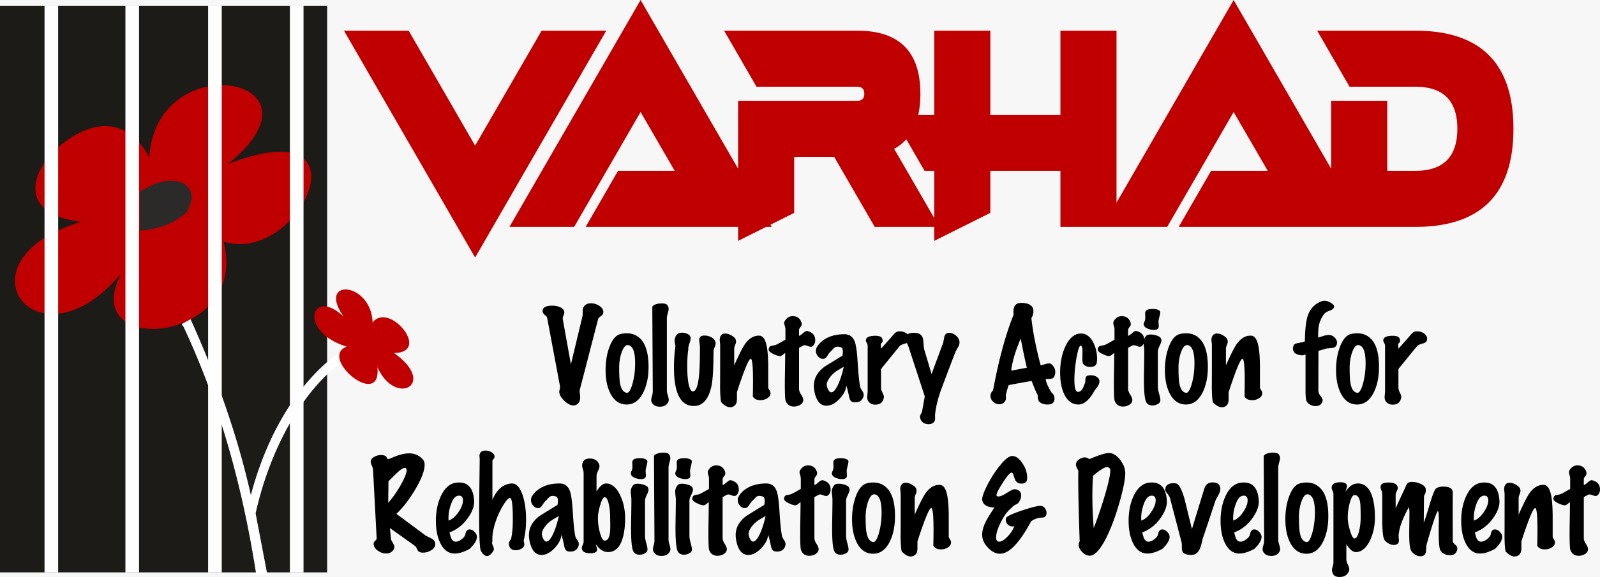 Voluntary Action for Rehabilitation and Development (VARHAD)